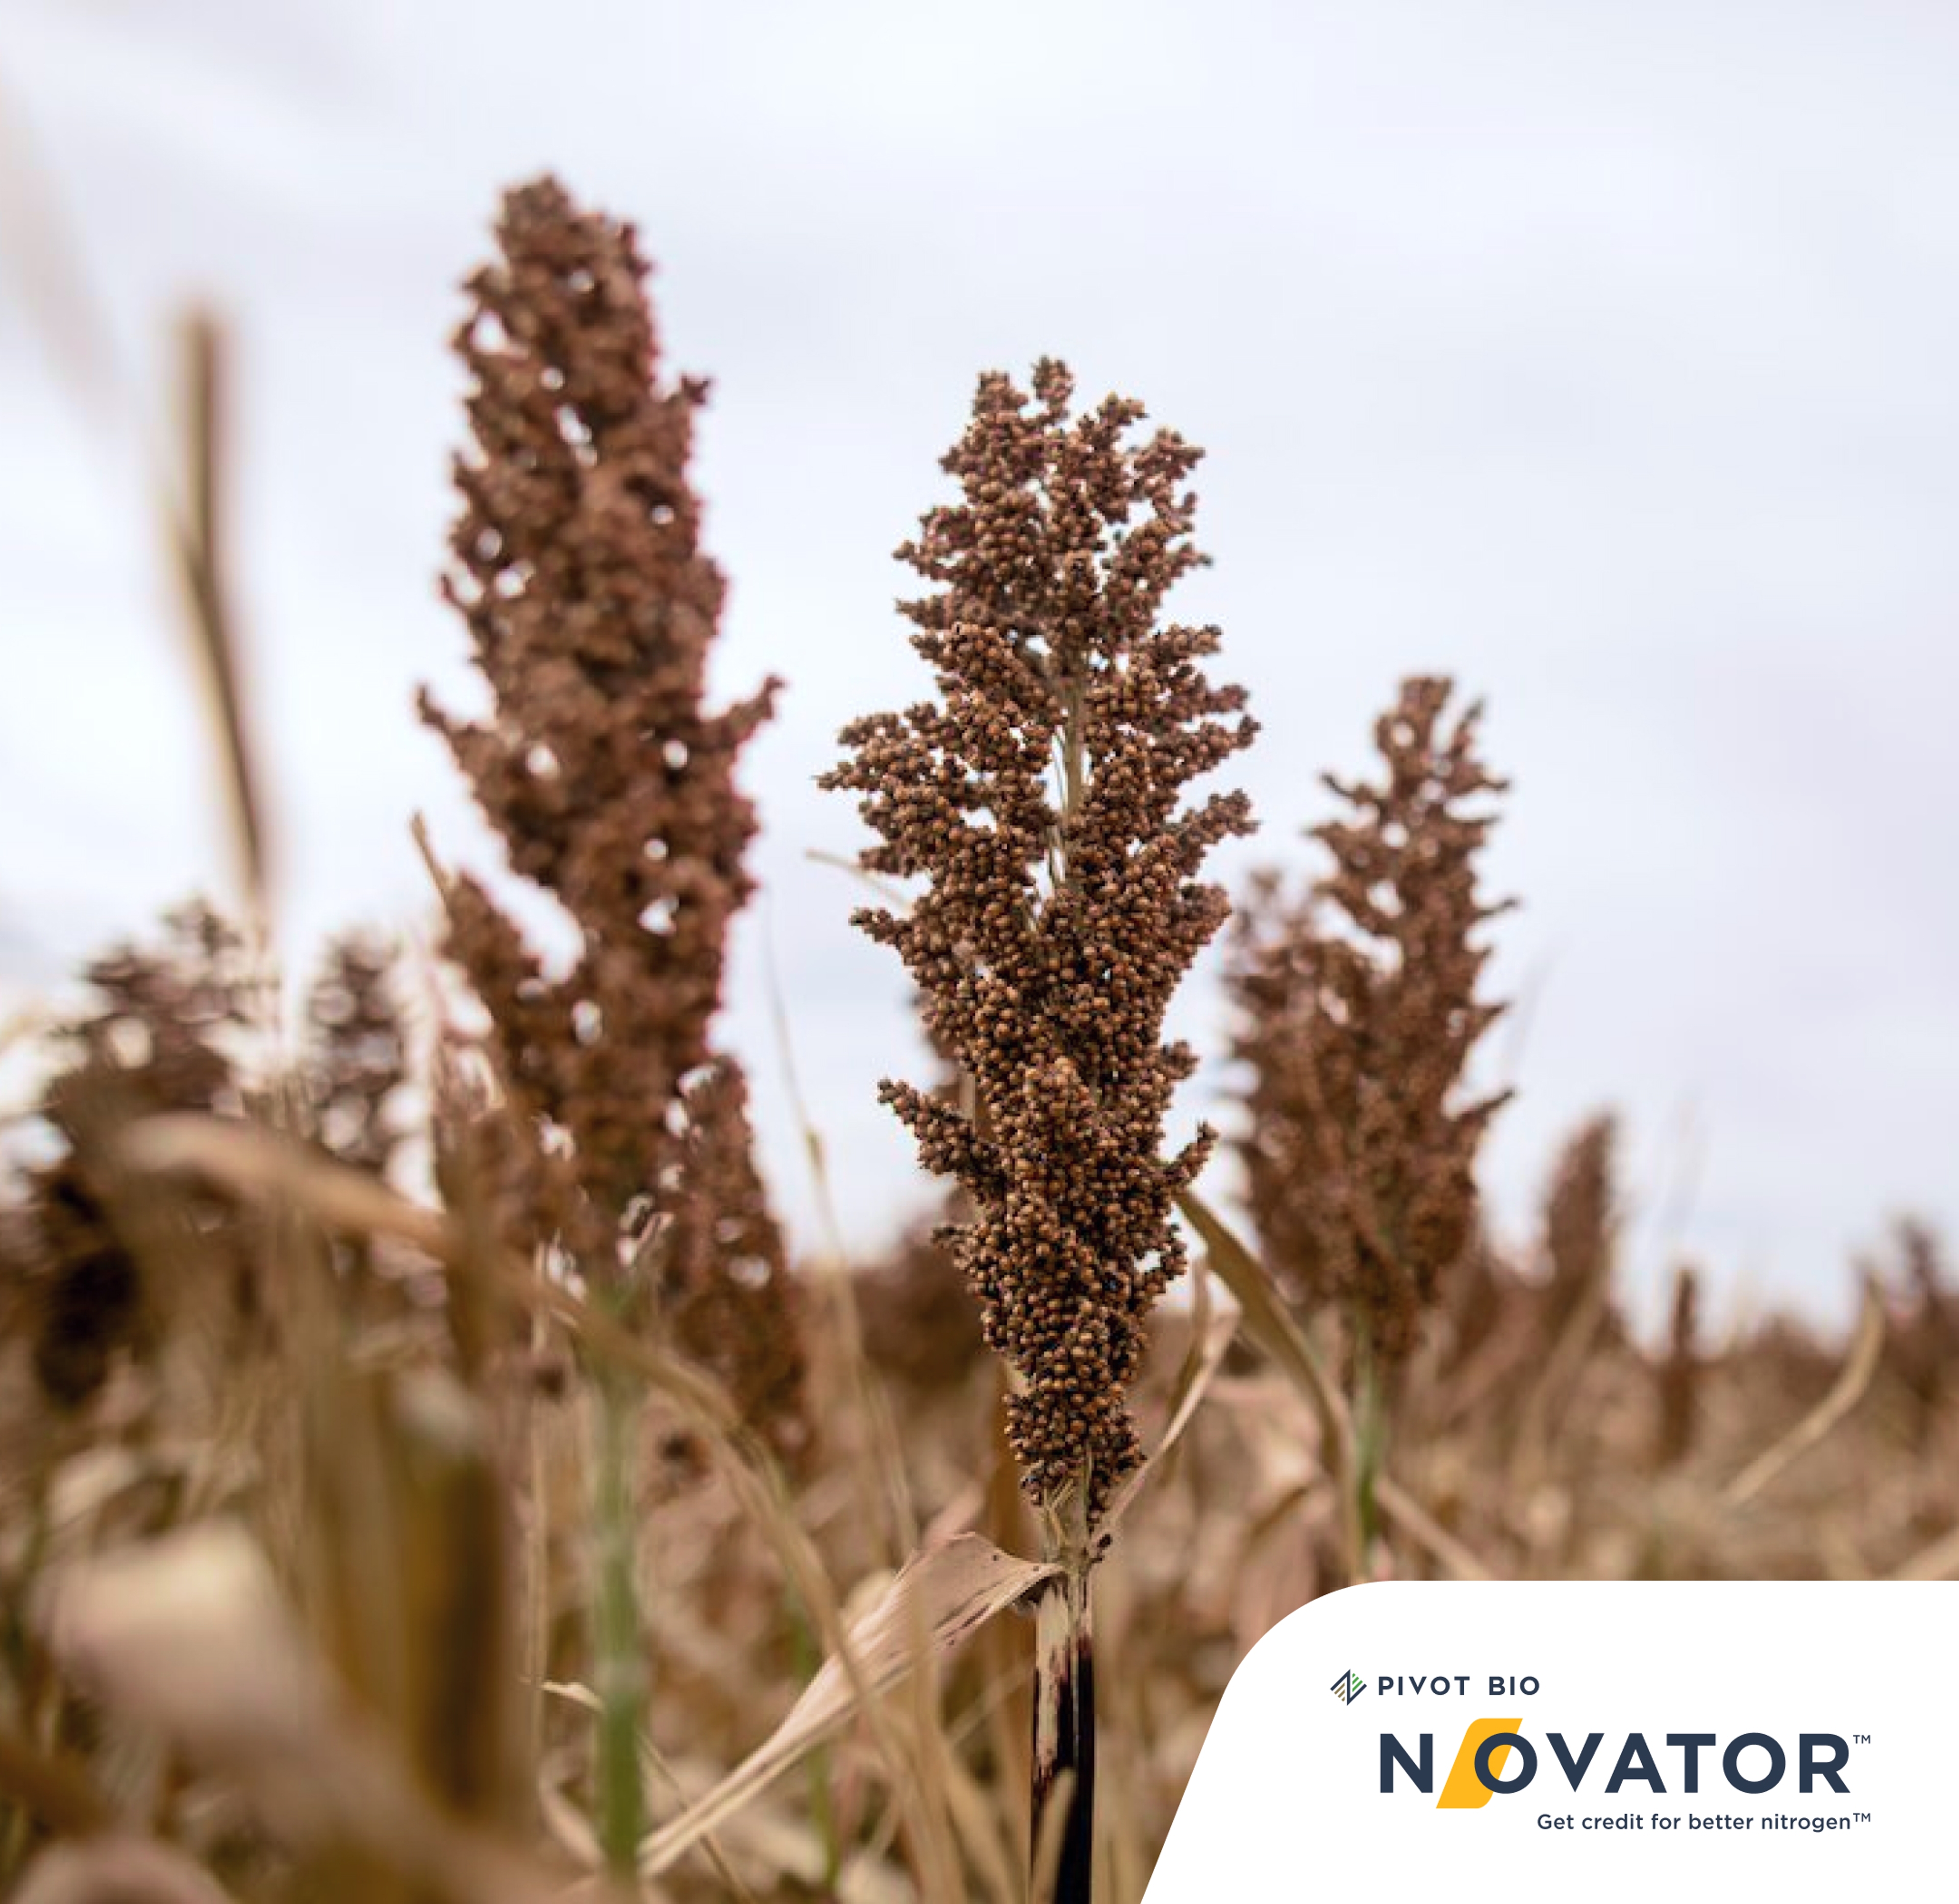 Sorghum crop in a field with the Pivot Bio Novator logo in the corner